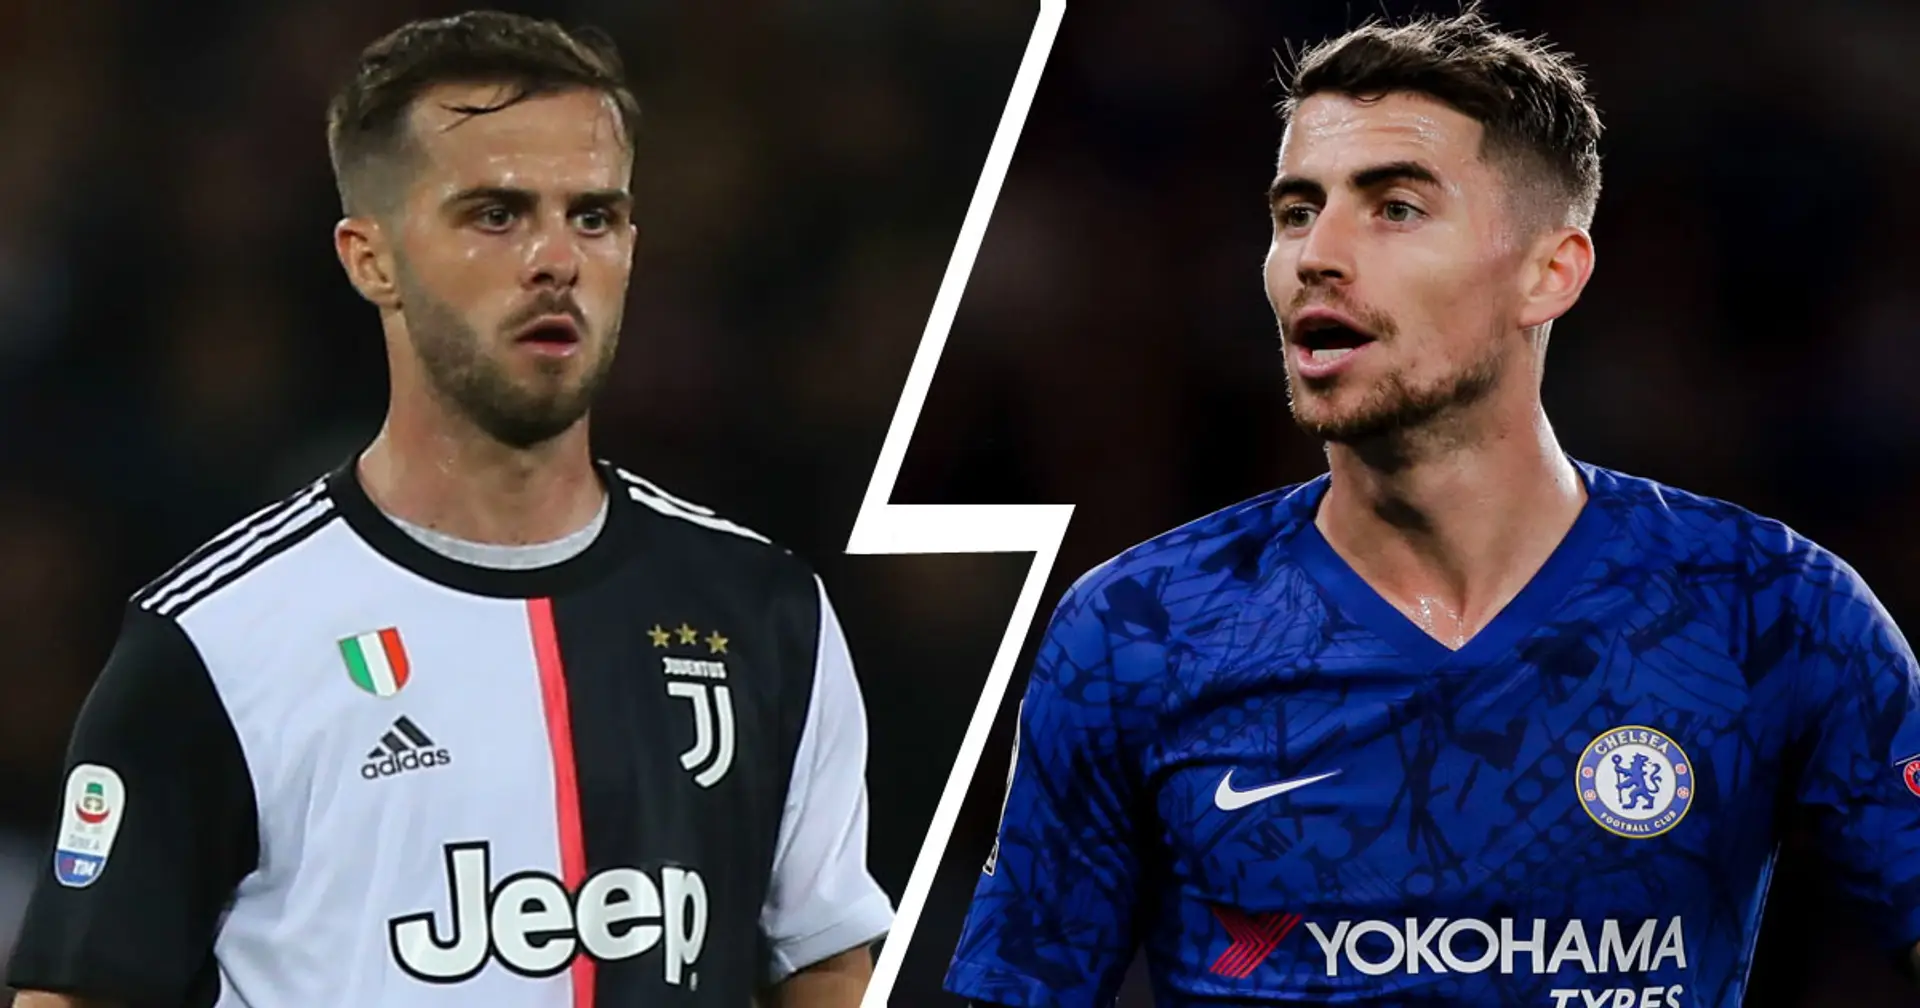 ✈️THURSDAY TRANSFER: Should Chelsea replace Jorginho with Pjanic this summer?